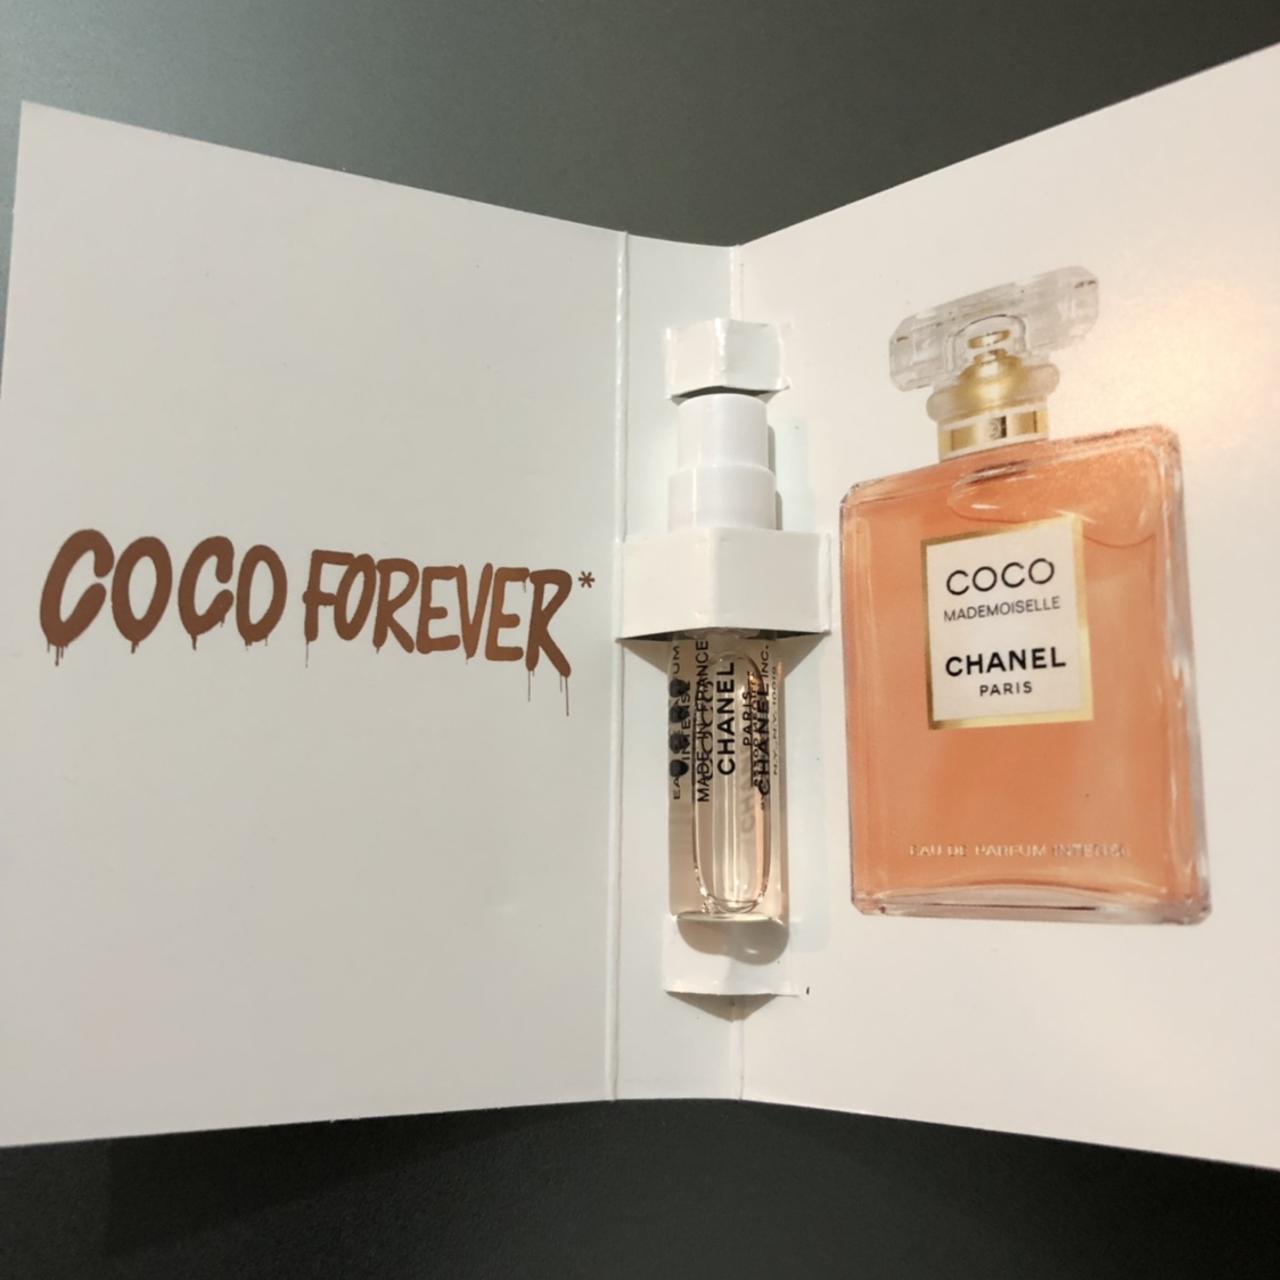 Chanel luxury fragrance 💛, Coco mademoiselle intense